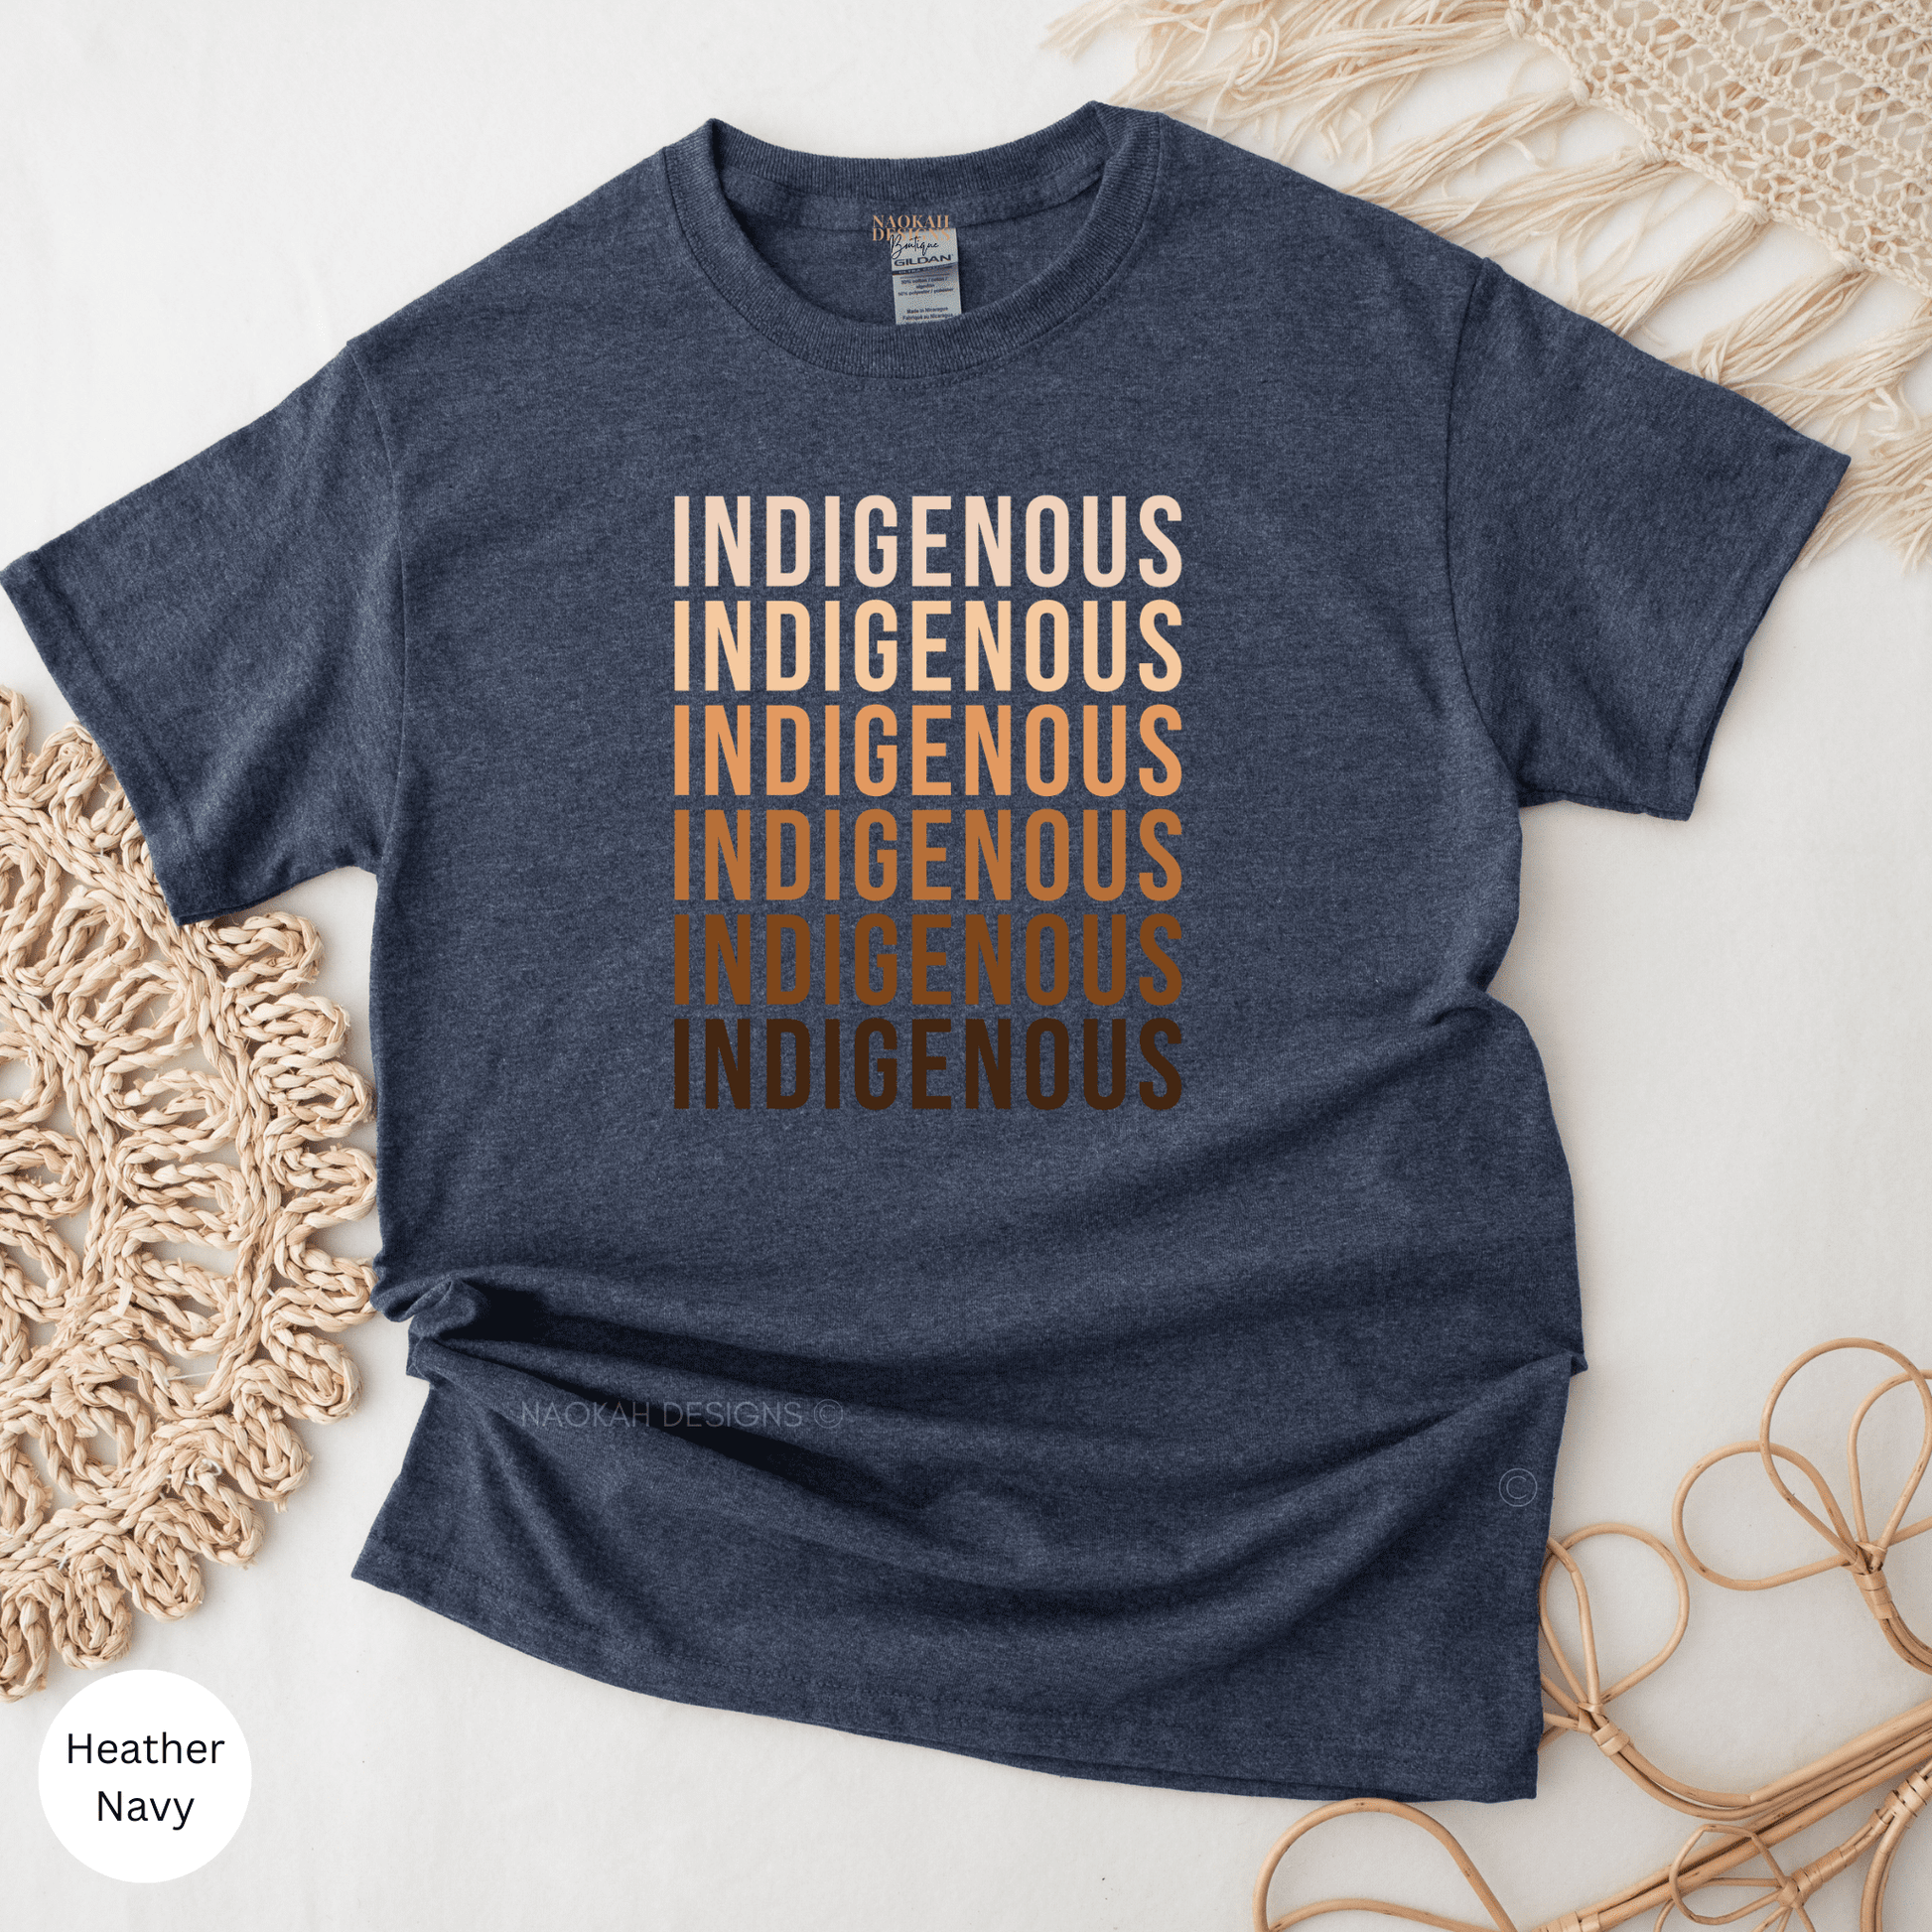 Indigenous Shirt, Indigenous Pride, Indigenous Resilient Shirt, Native Rights Shirt, Indigenous melanin shirt, Indigenous repeated words tee